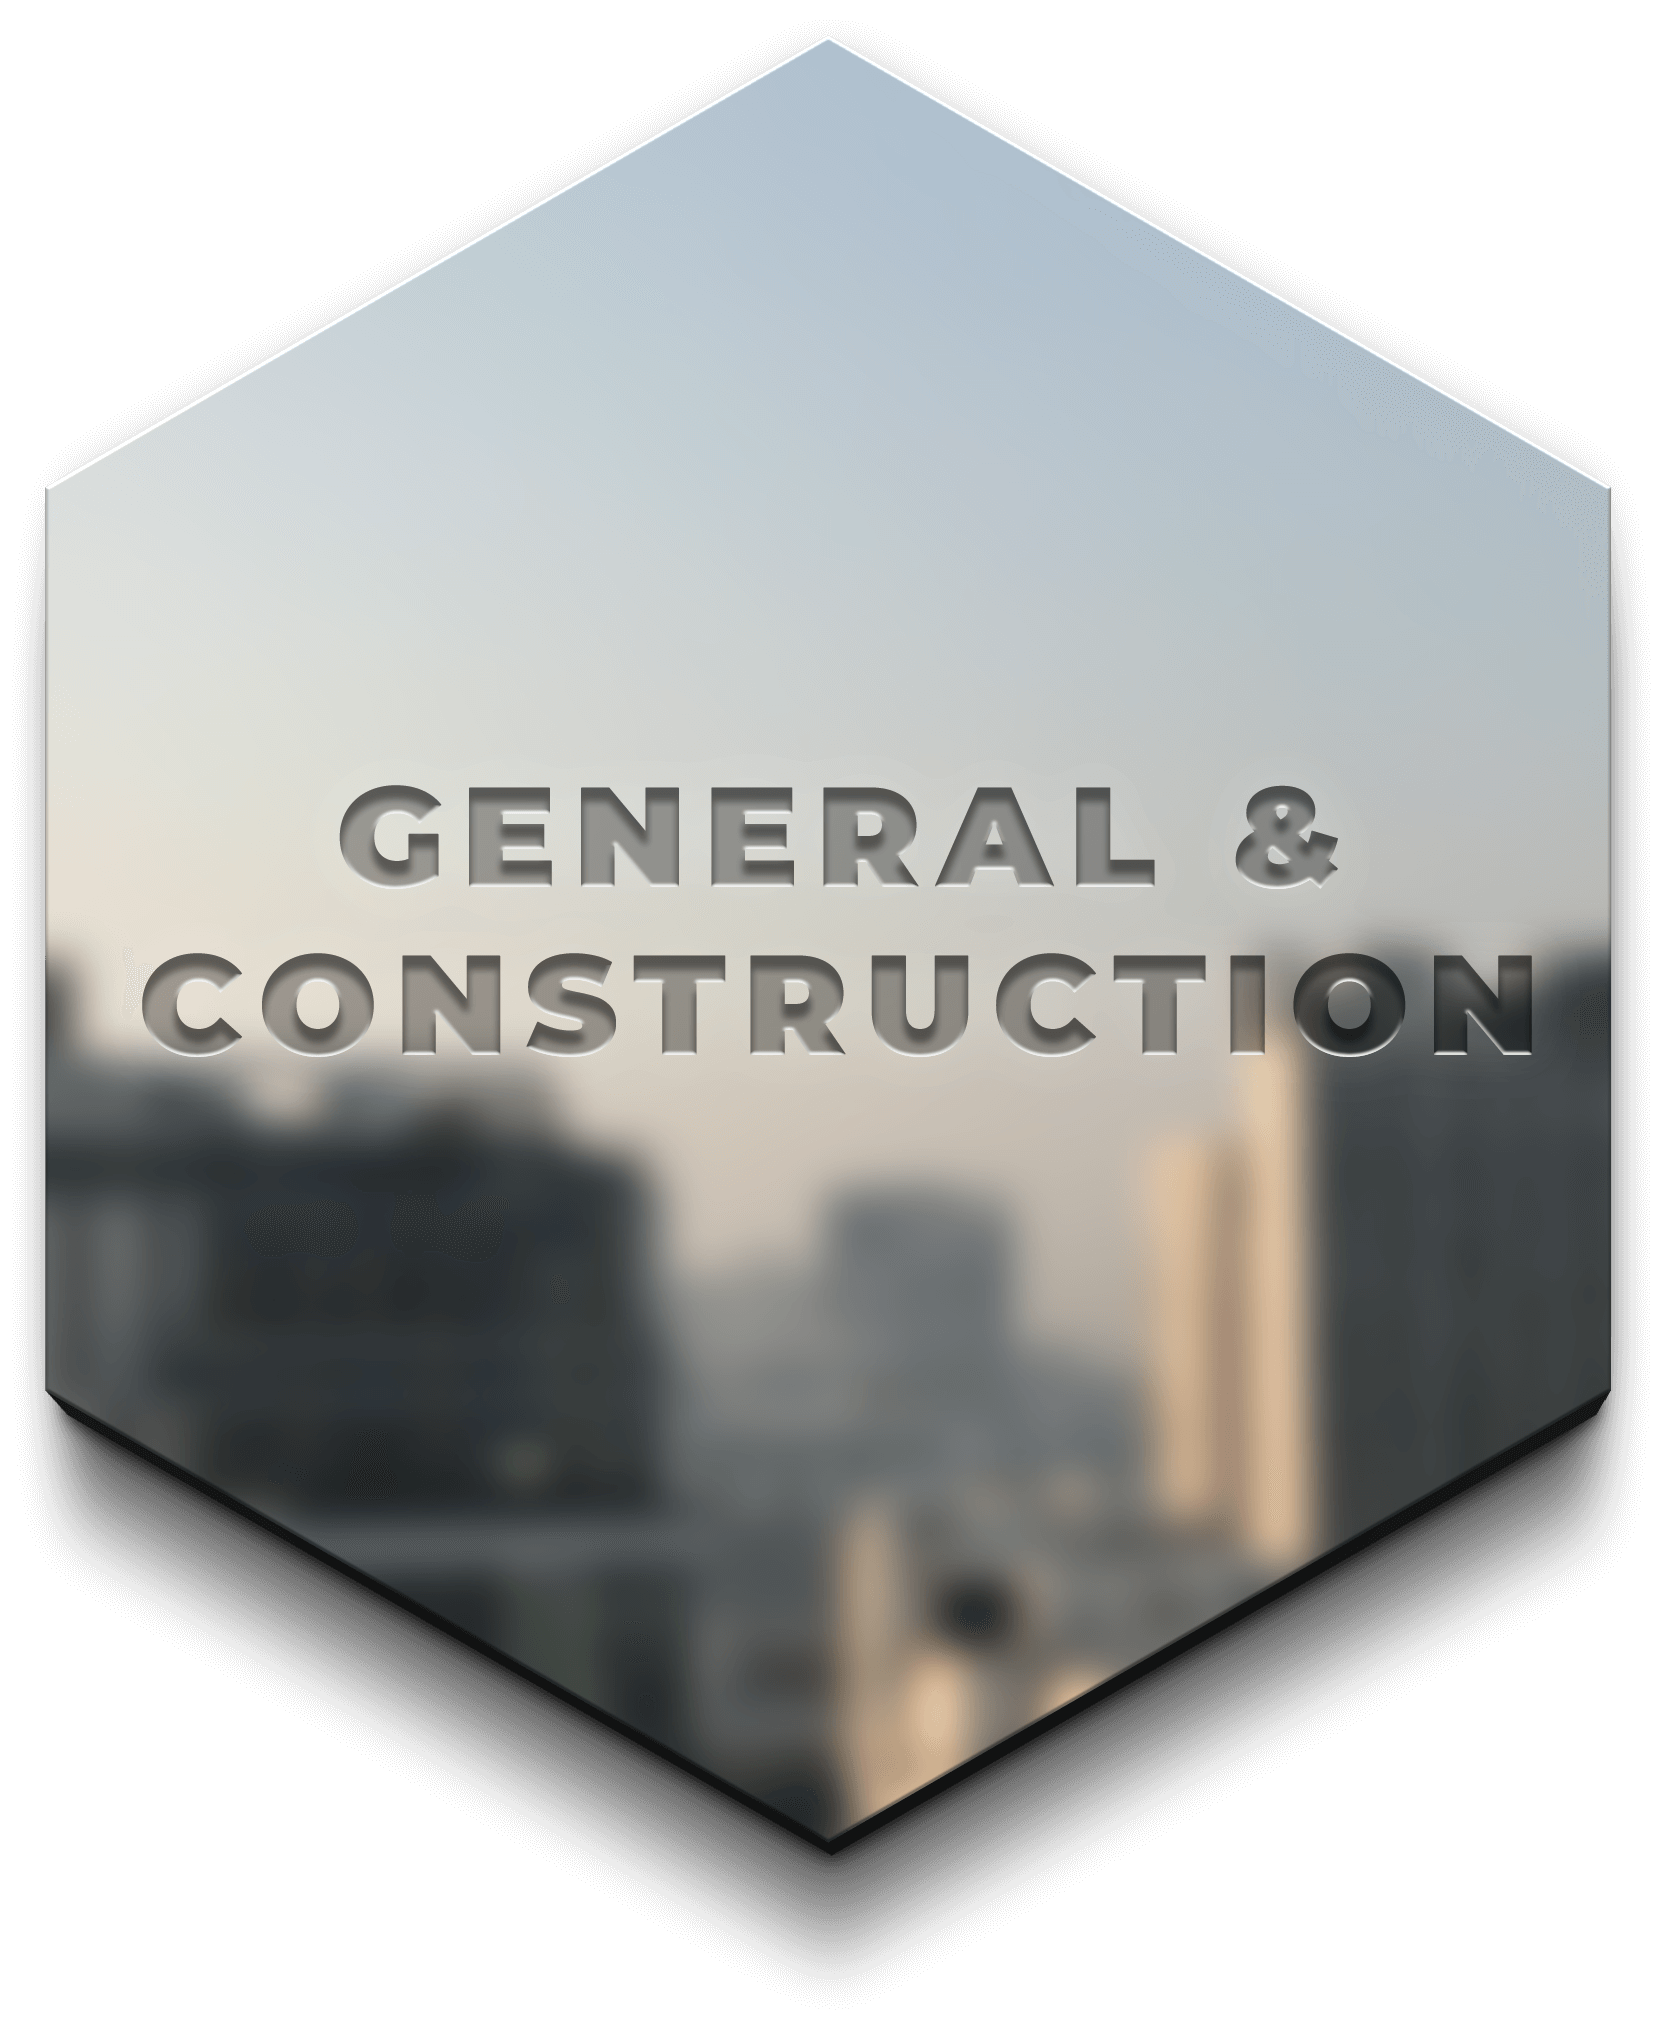 General & Construction